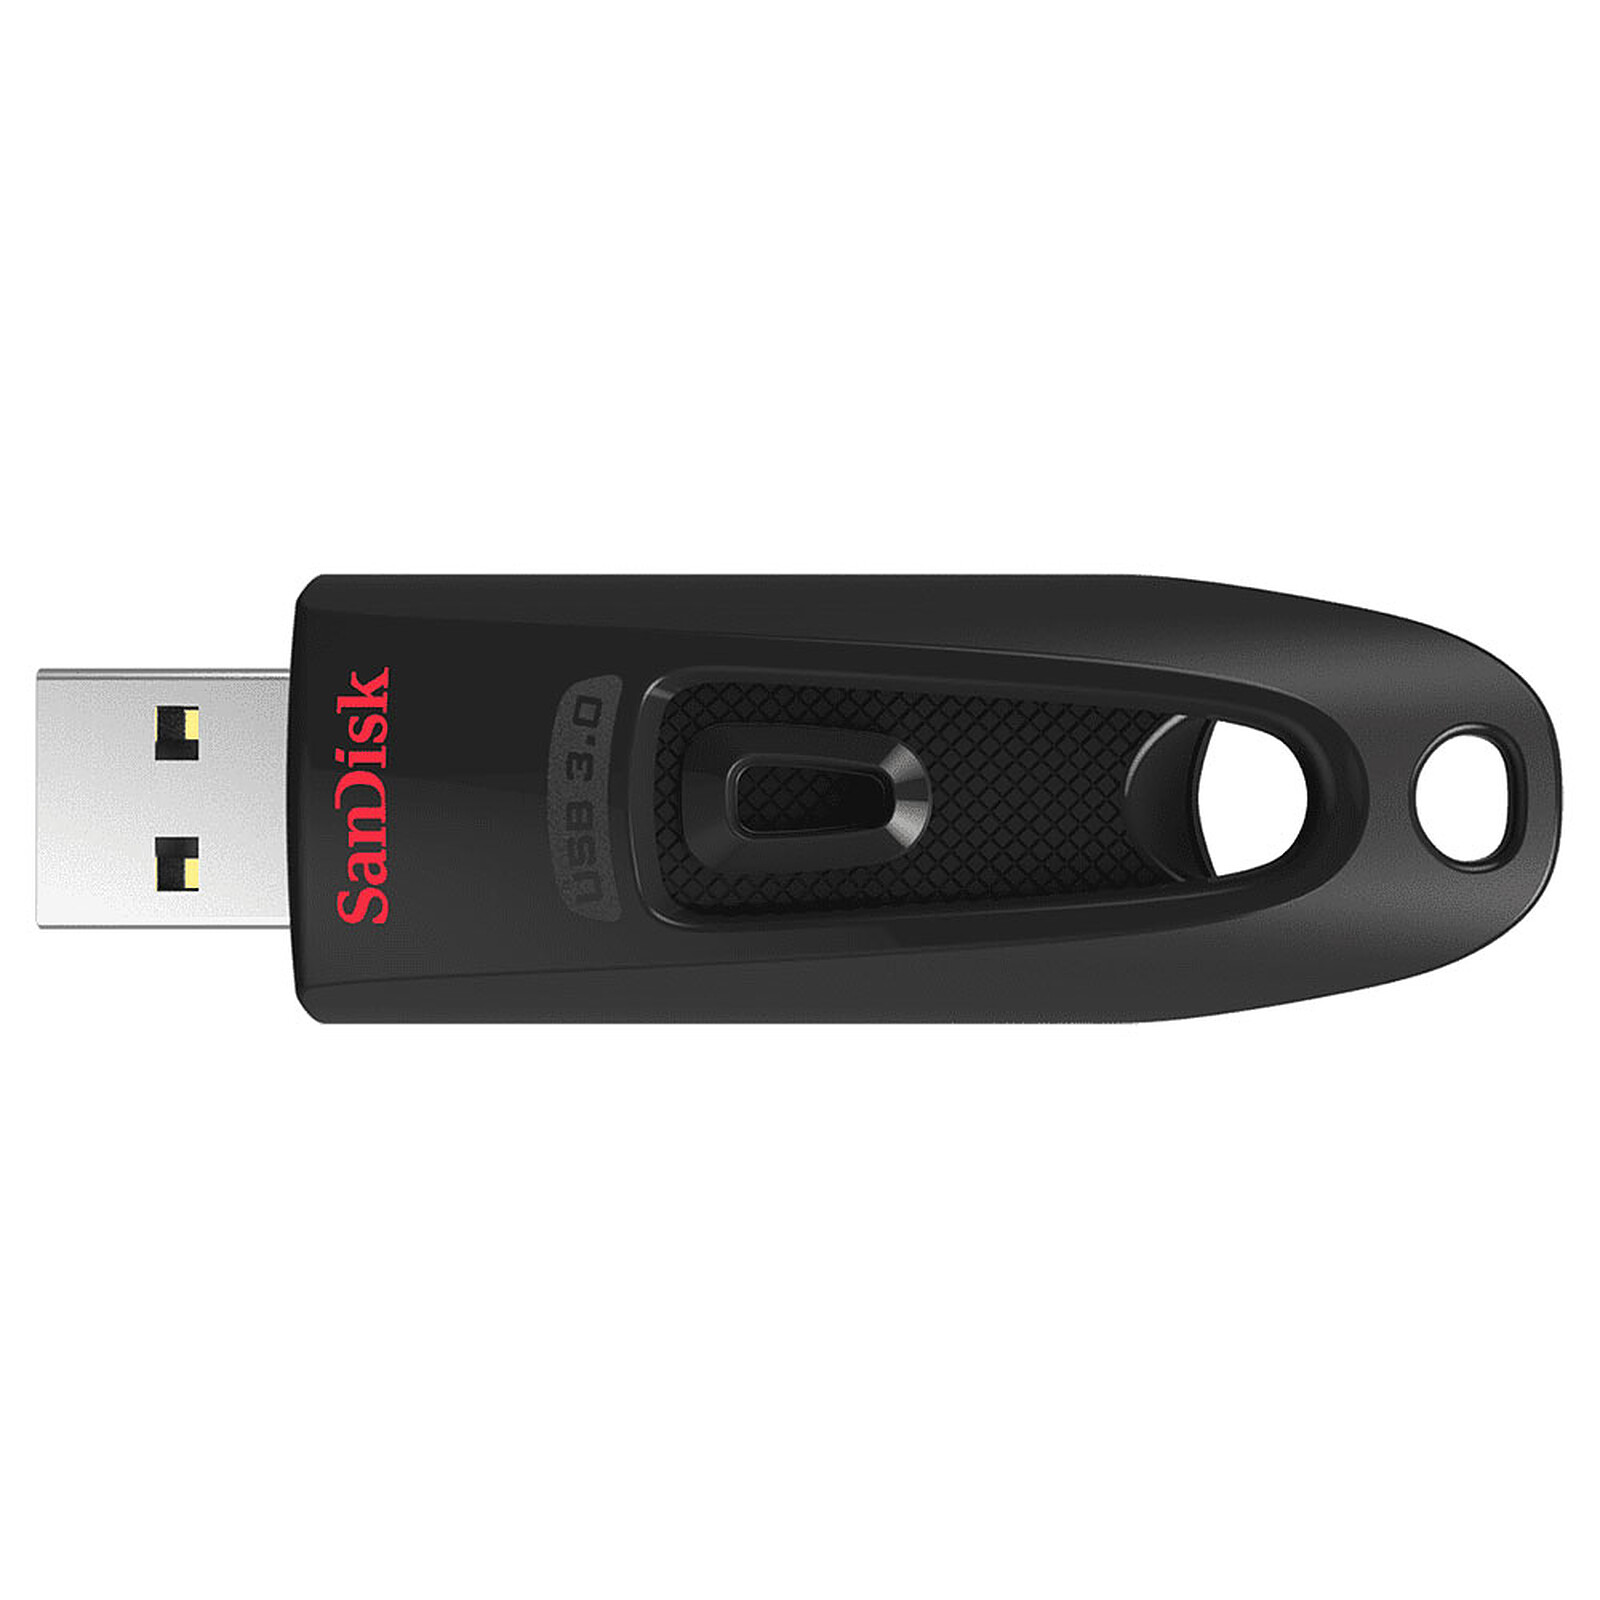 SanDisk Cl Ultra USB 3.0 512 GB - USB flash drive - LDLC 3-year warranty